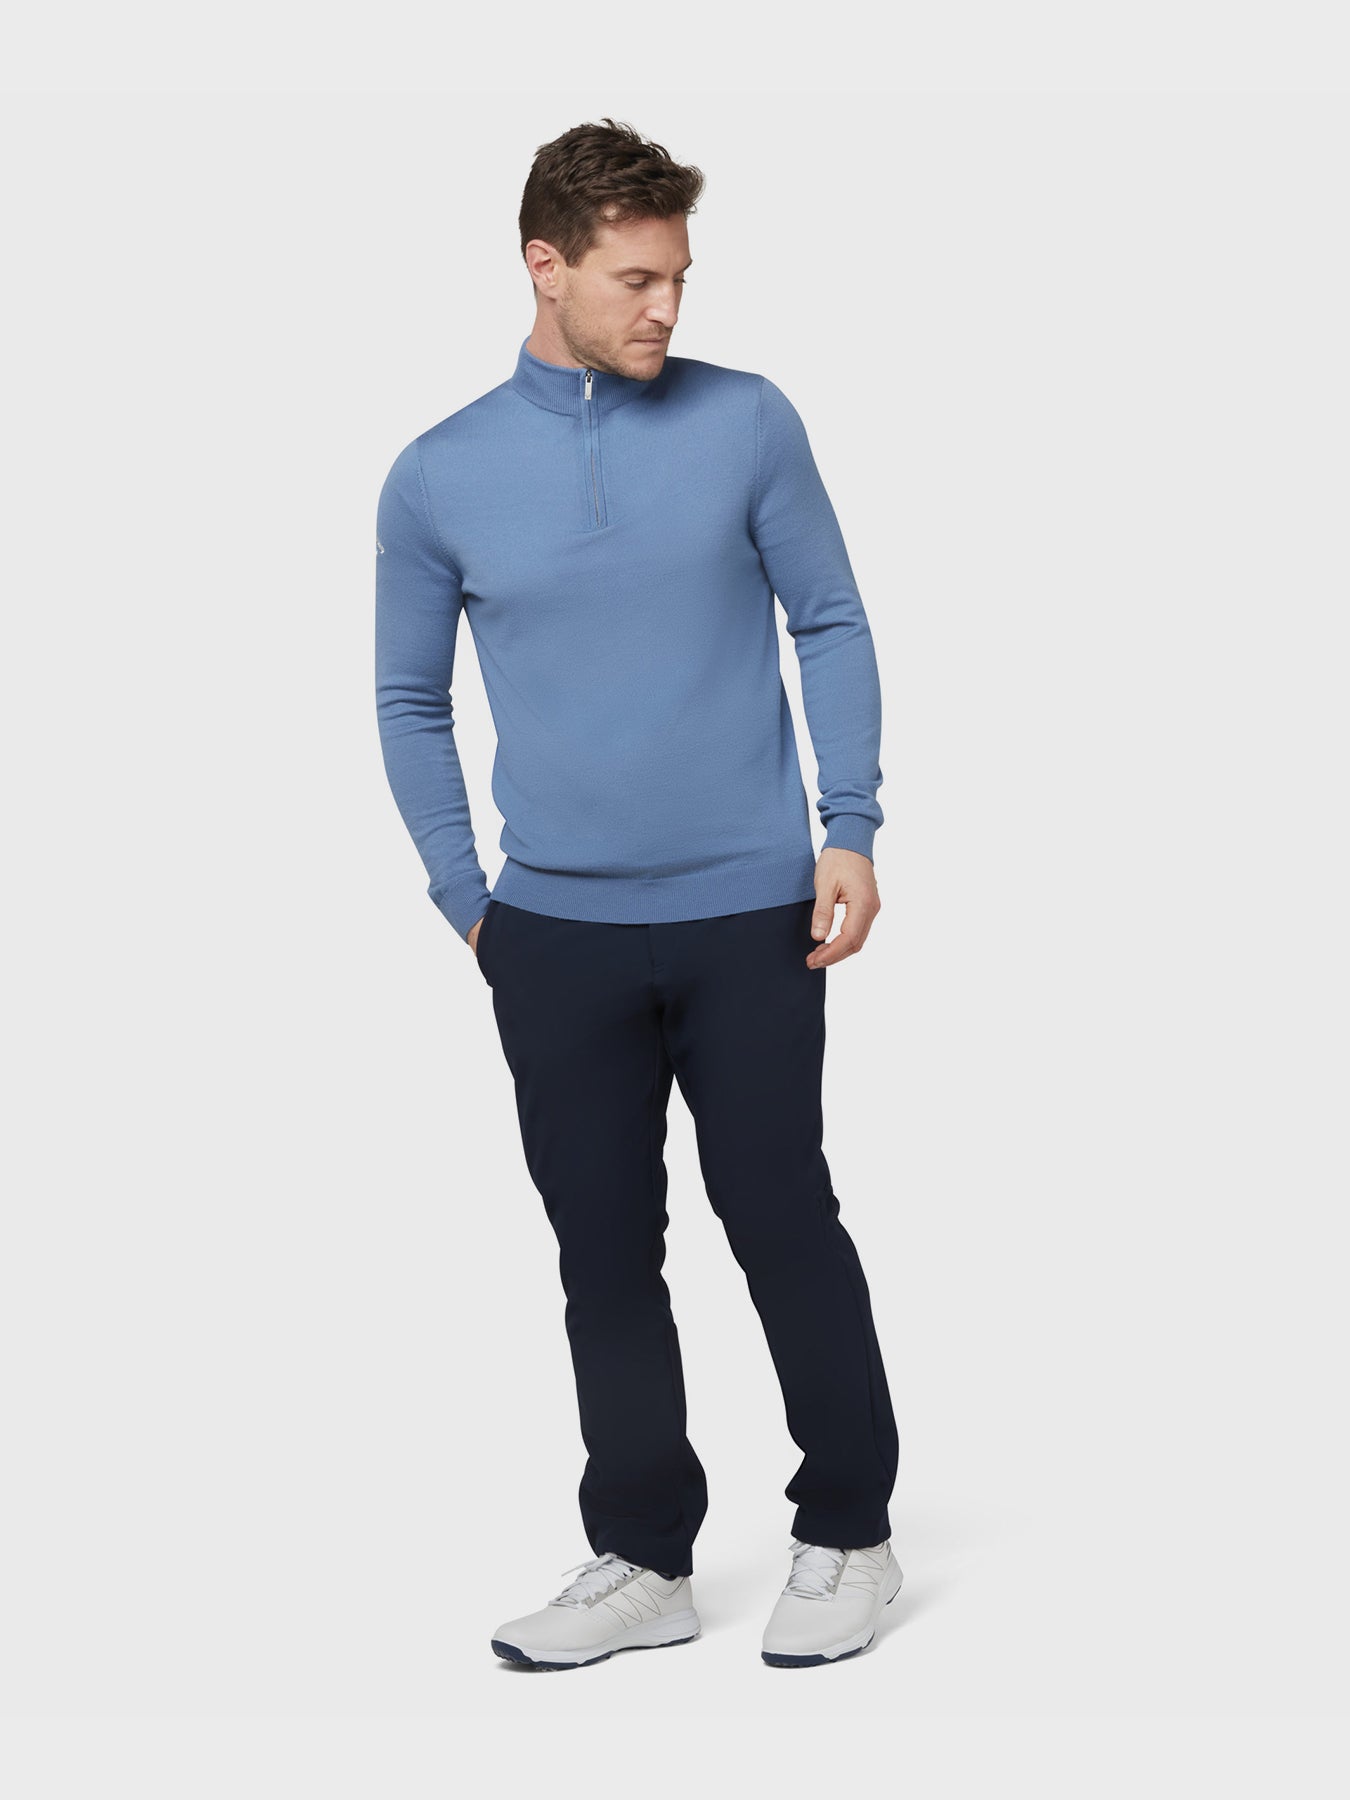 View Quarter Zip Merino Sweater In Blue Horizon Blue Horizon XL information